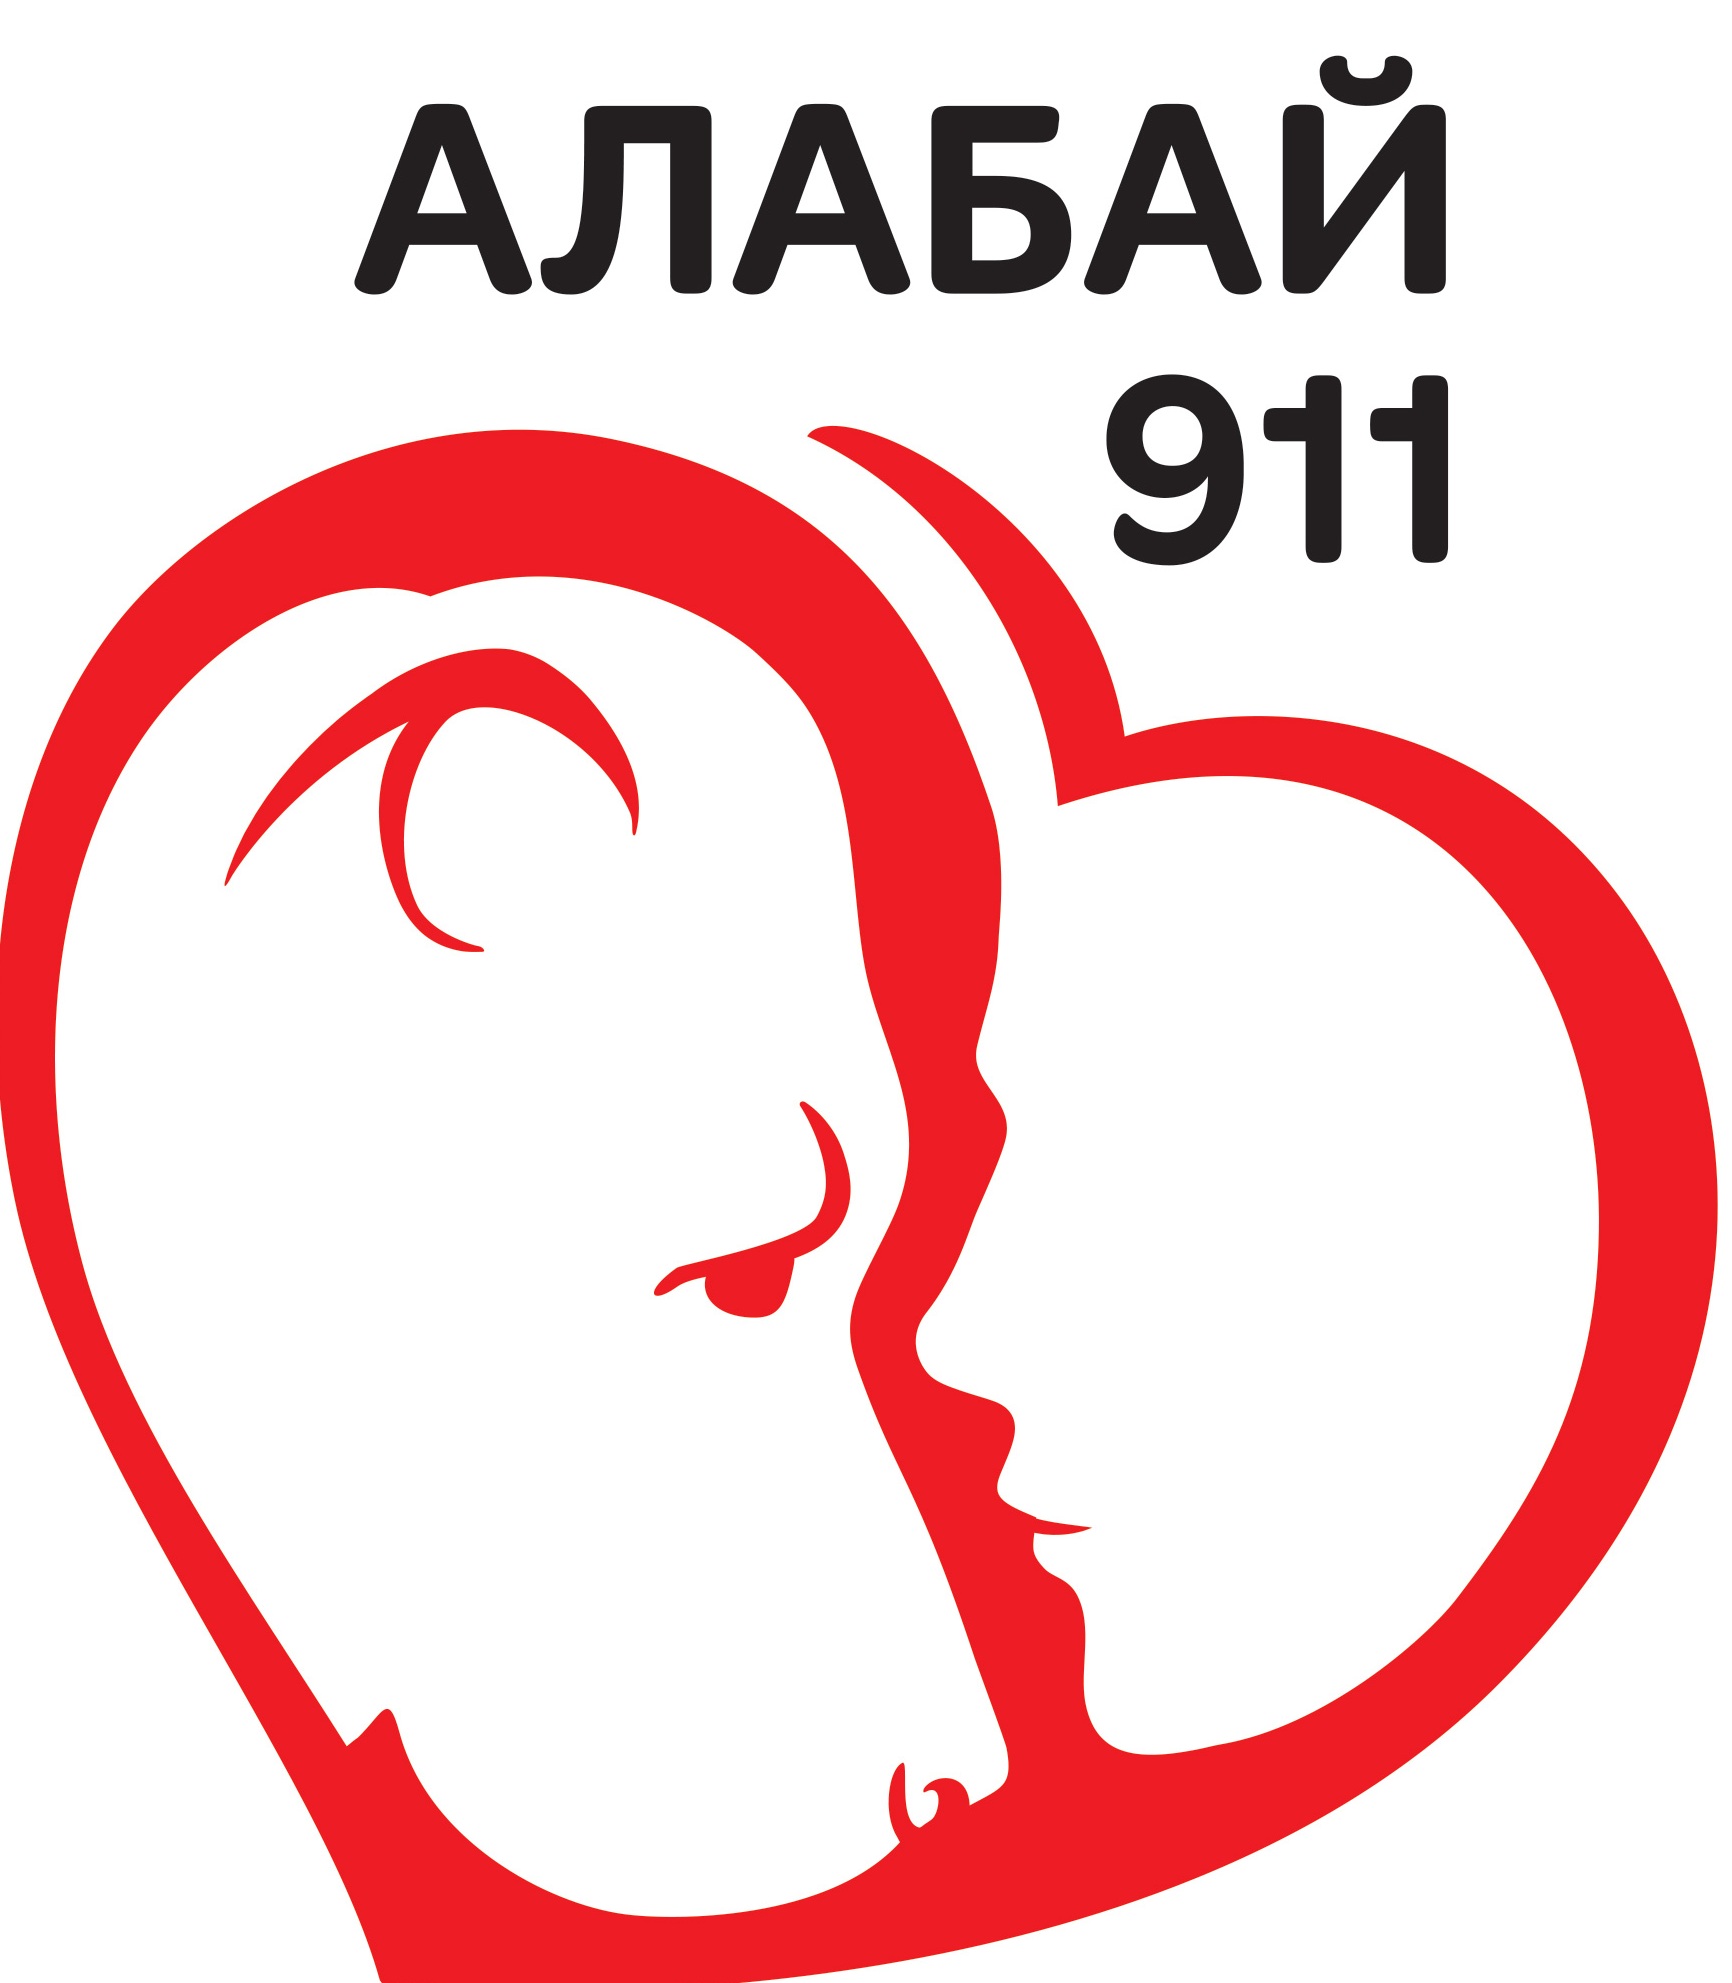 Алабай  911 (alabay_9111)